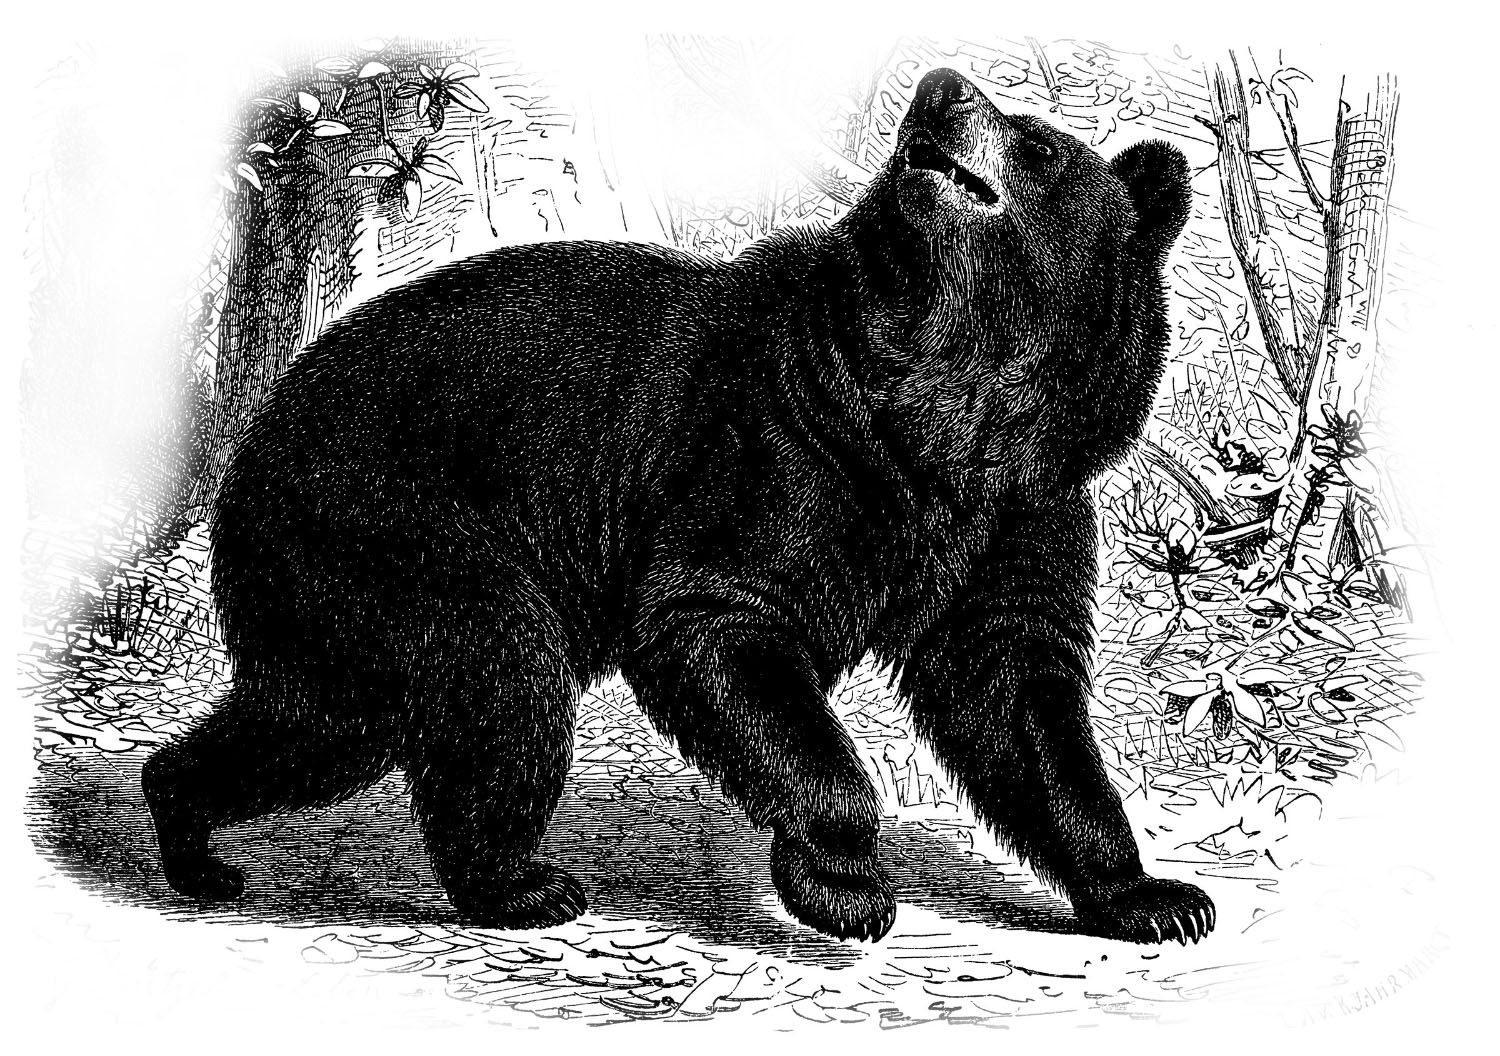 An illustration of a black bear